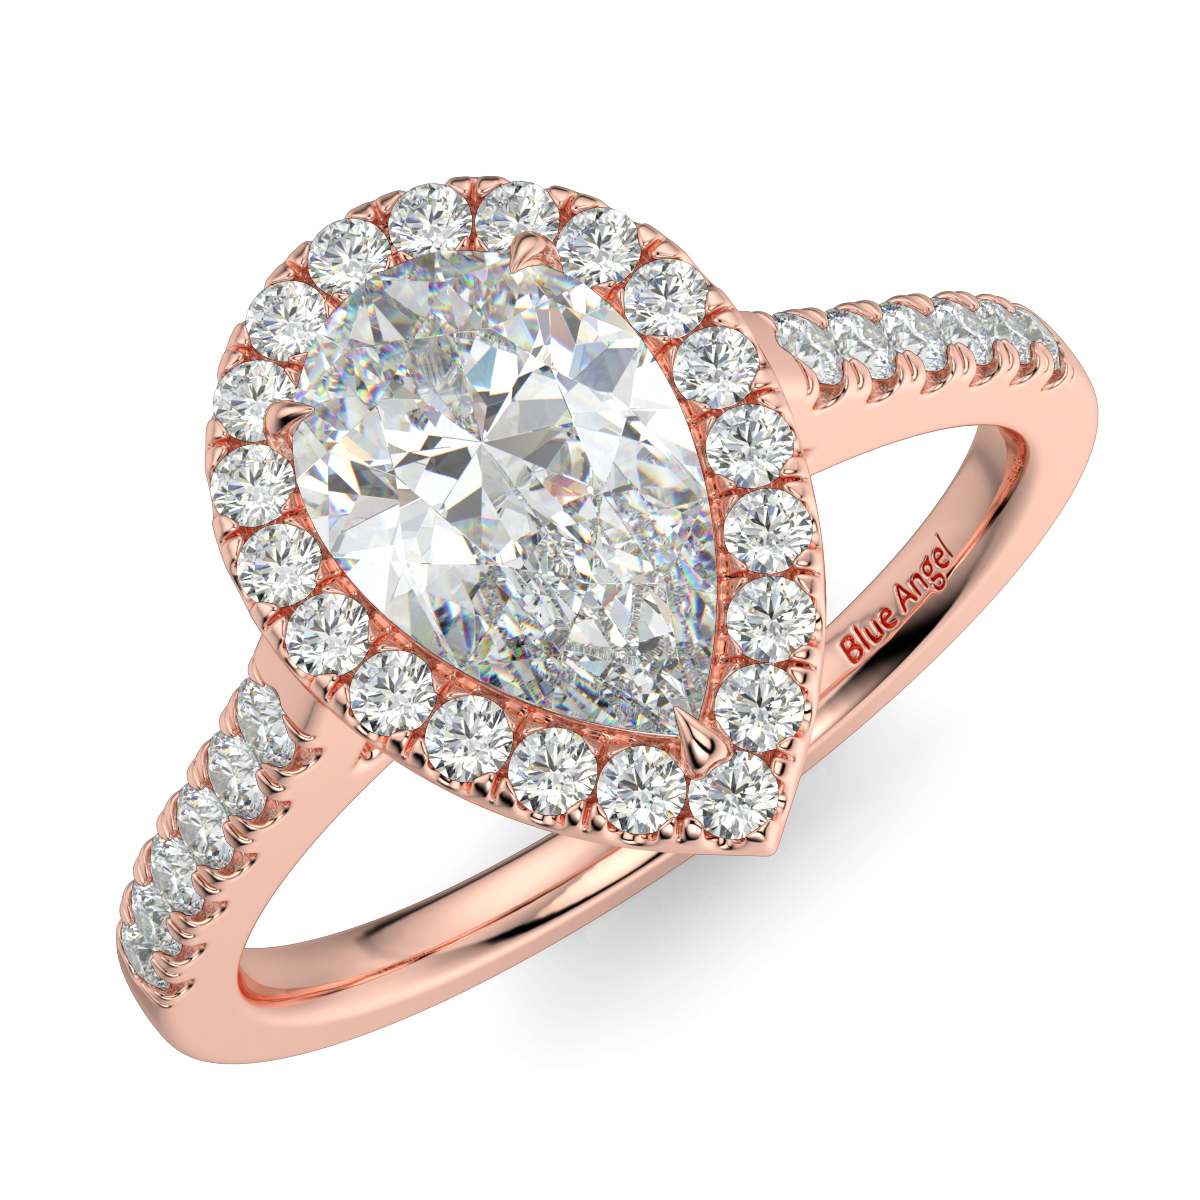 Pear Diamond Halo Engagement Ring